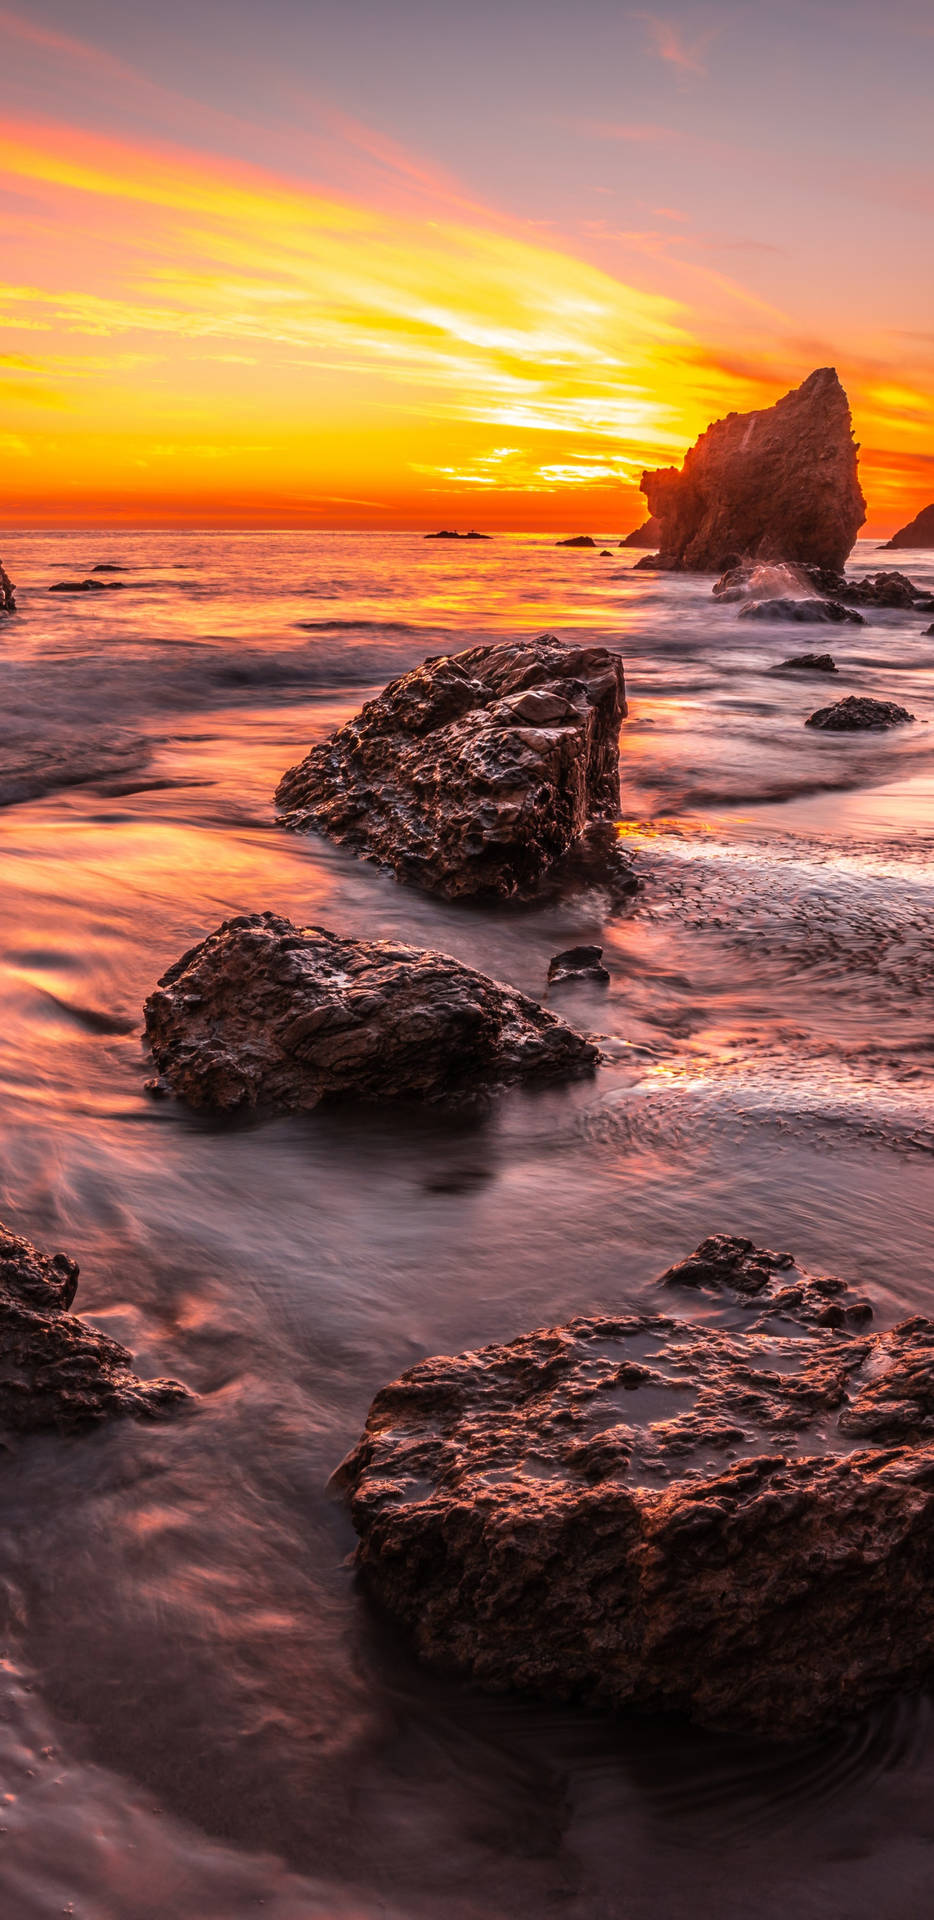 Iphone California Sunset At Beach Wallpaper